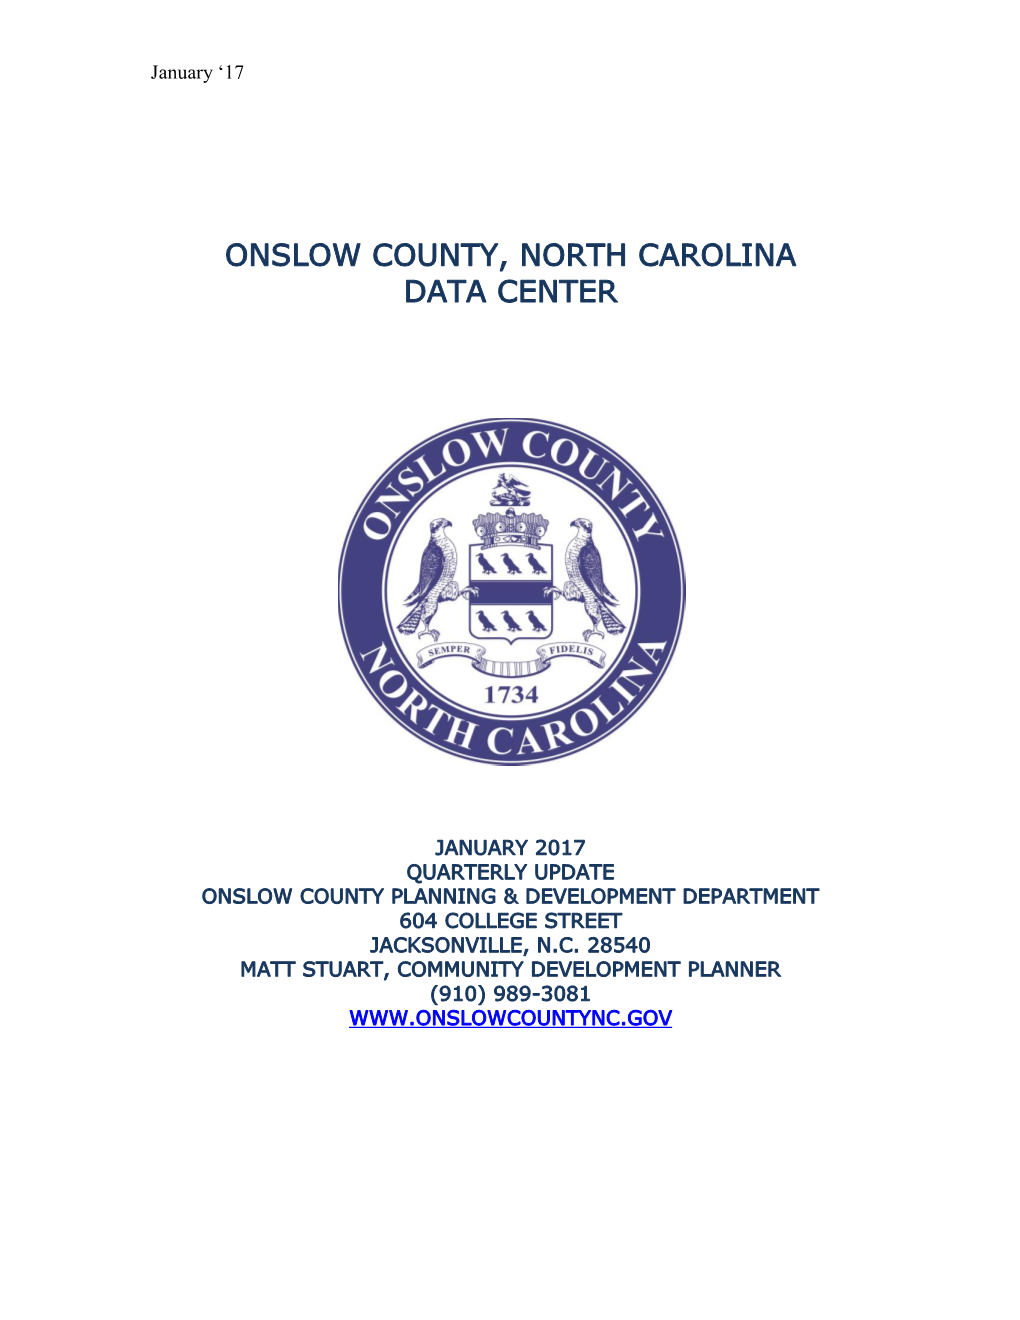 Onslow County, North Carolina Data Center